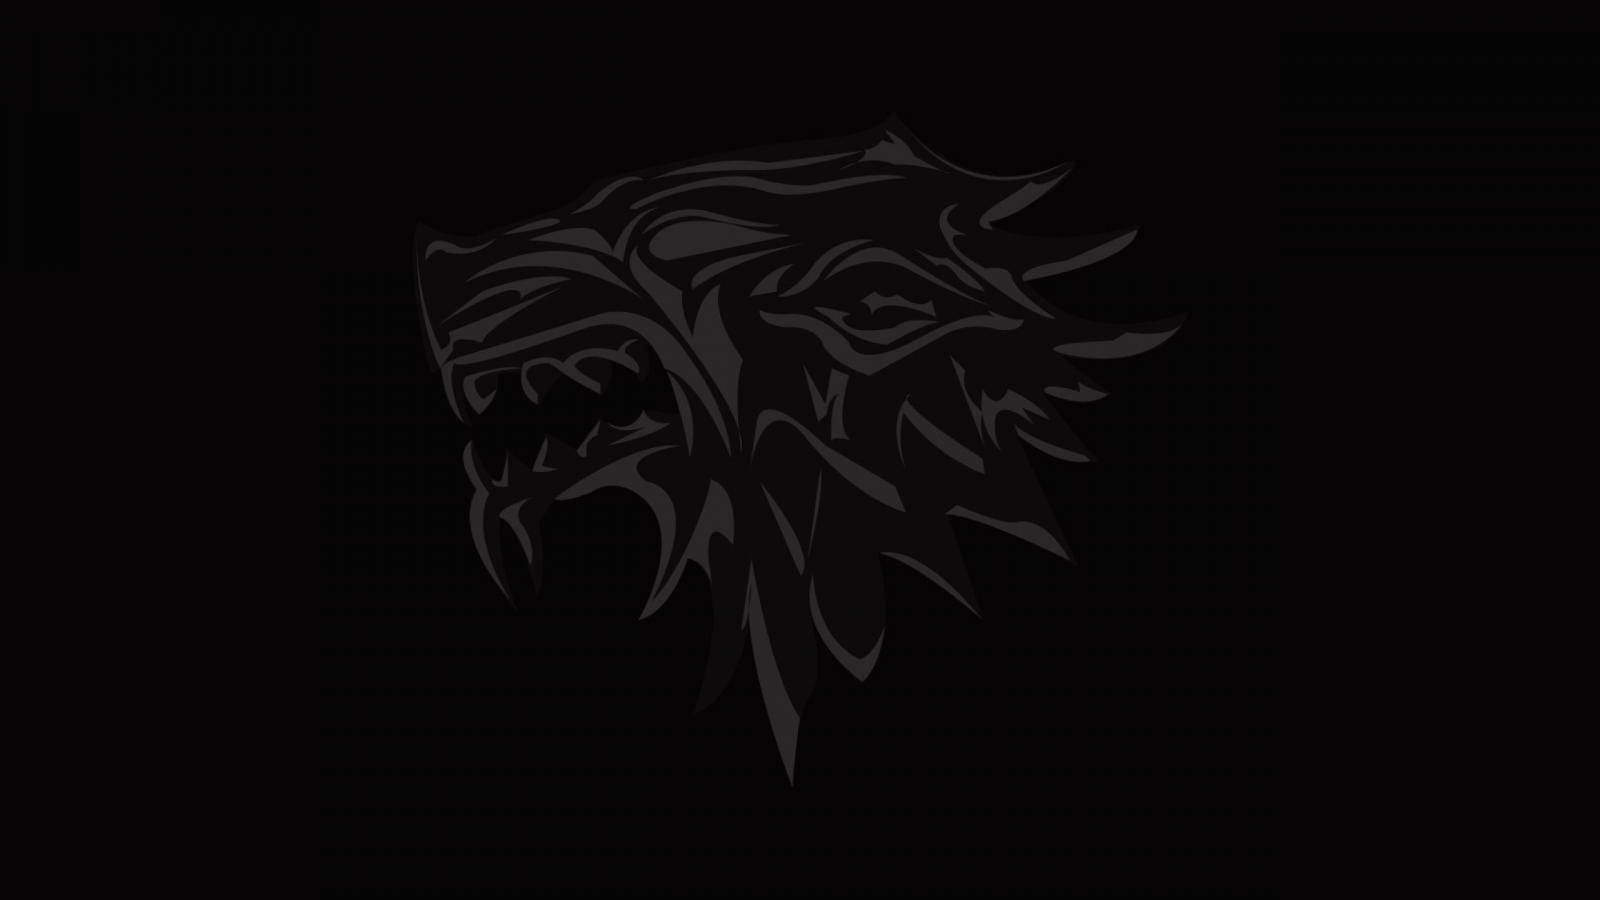 game of thrones, волк, логотип, герб, house of stark